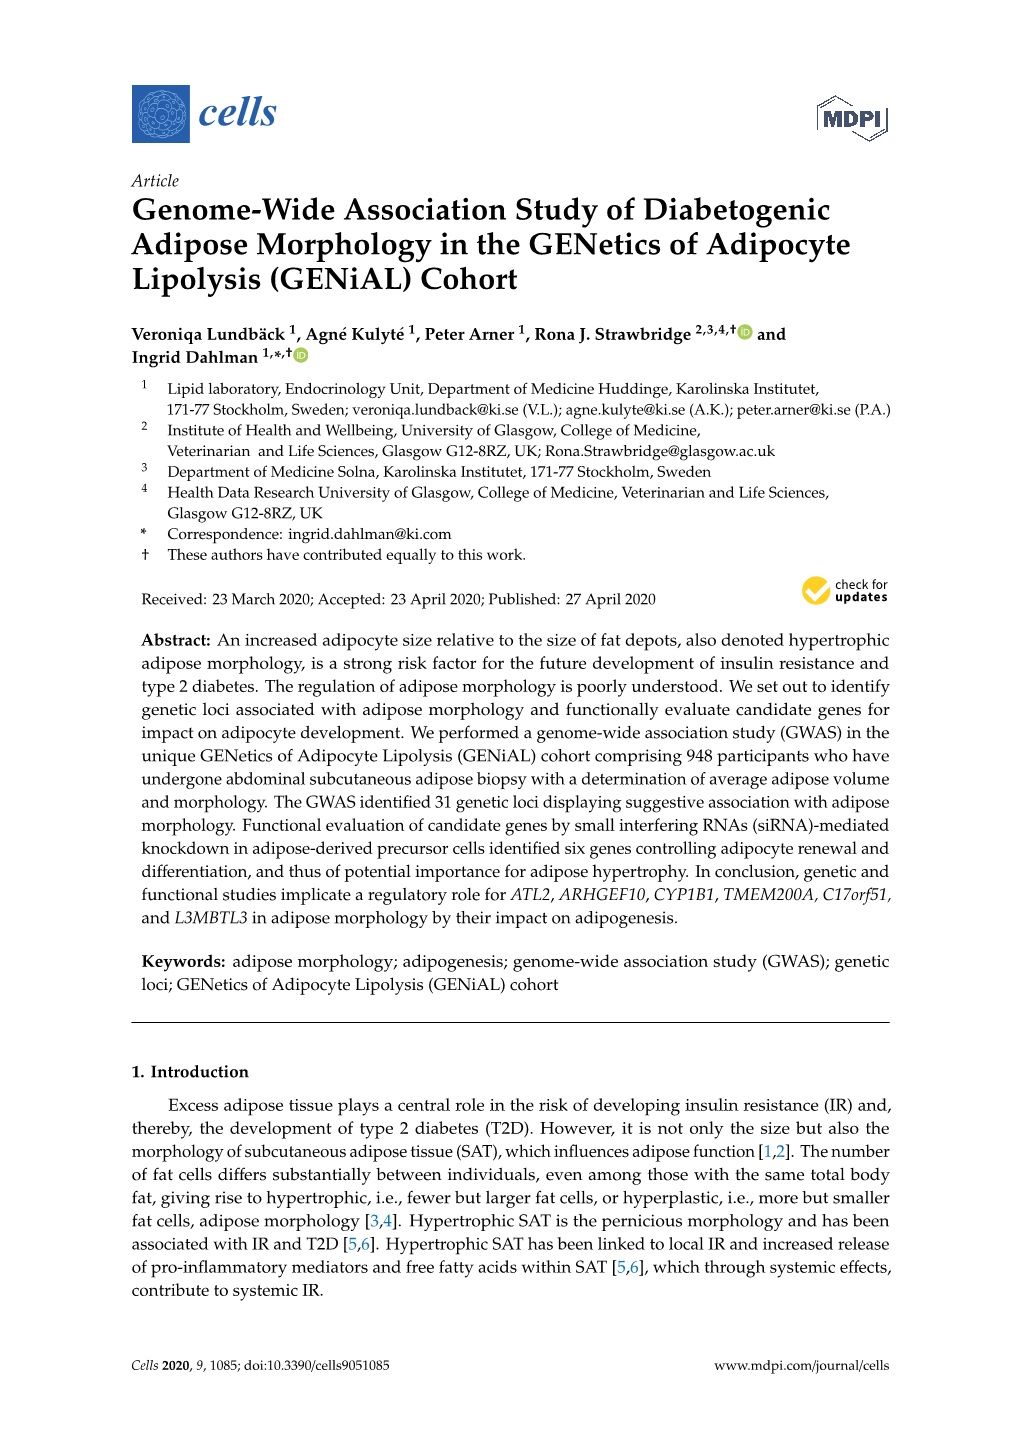 Genome-Wide Association Study of Diabetogenic Adipose Morphology in the Genetics of Adipocyte Lipolysis (Genial) Cohort